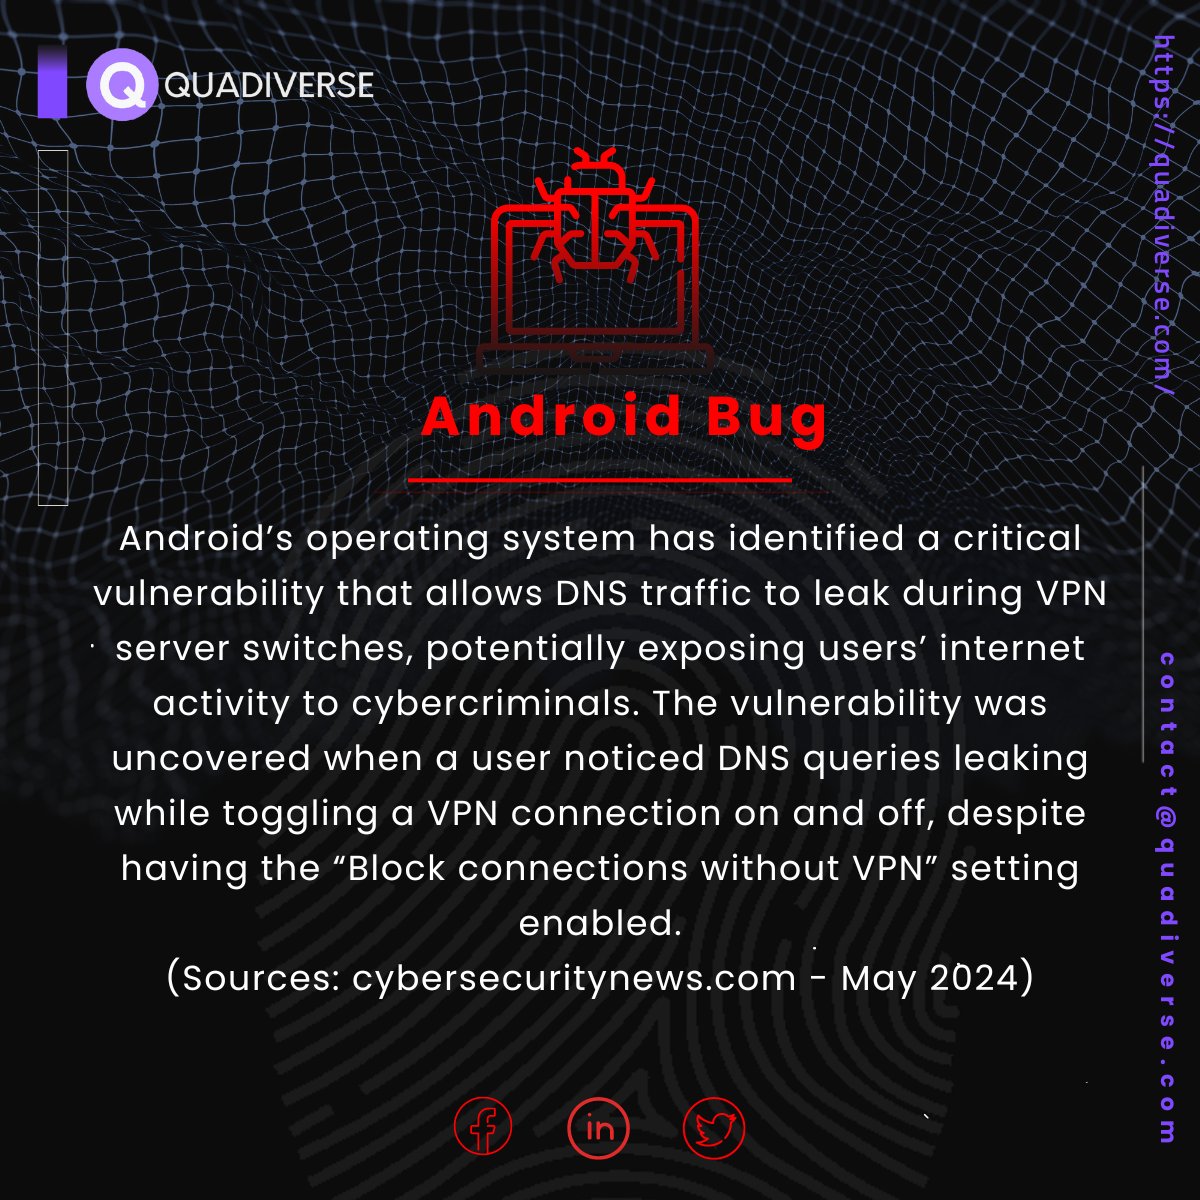 Visit us at: quadiverse.com
.
.
#quadiverse #softwareupdates #securityalerts #cybersecurity #SoftwareTesting #qa #quadiverse #automation #qualityassurance #Tech #vulnerable #bugs #bugfree #defects #vulnerbilities